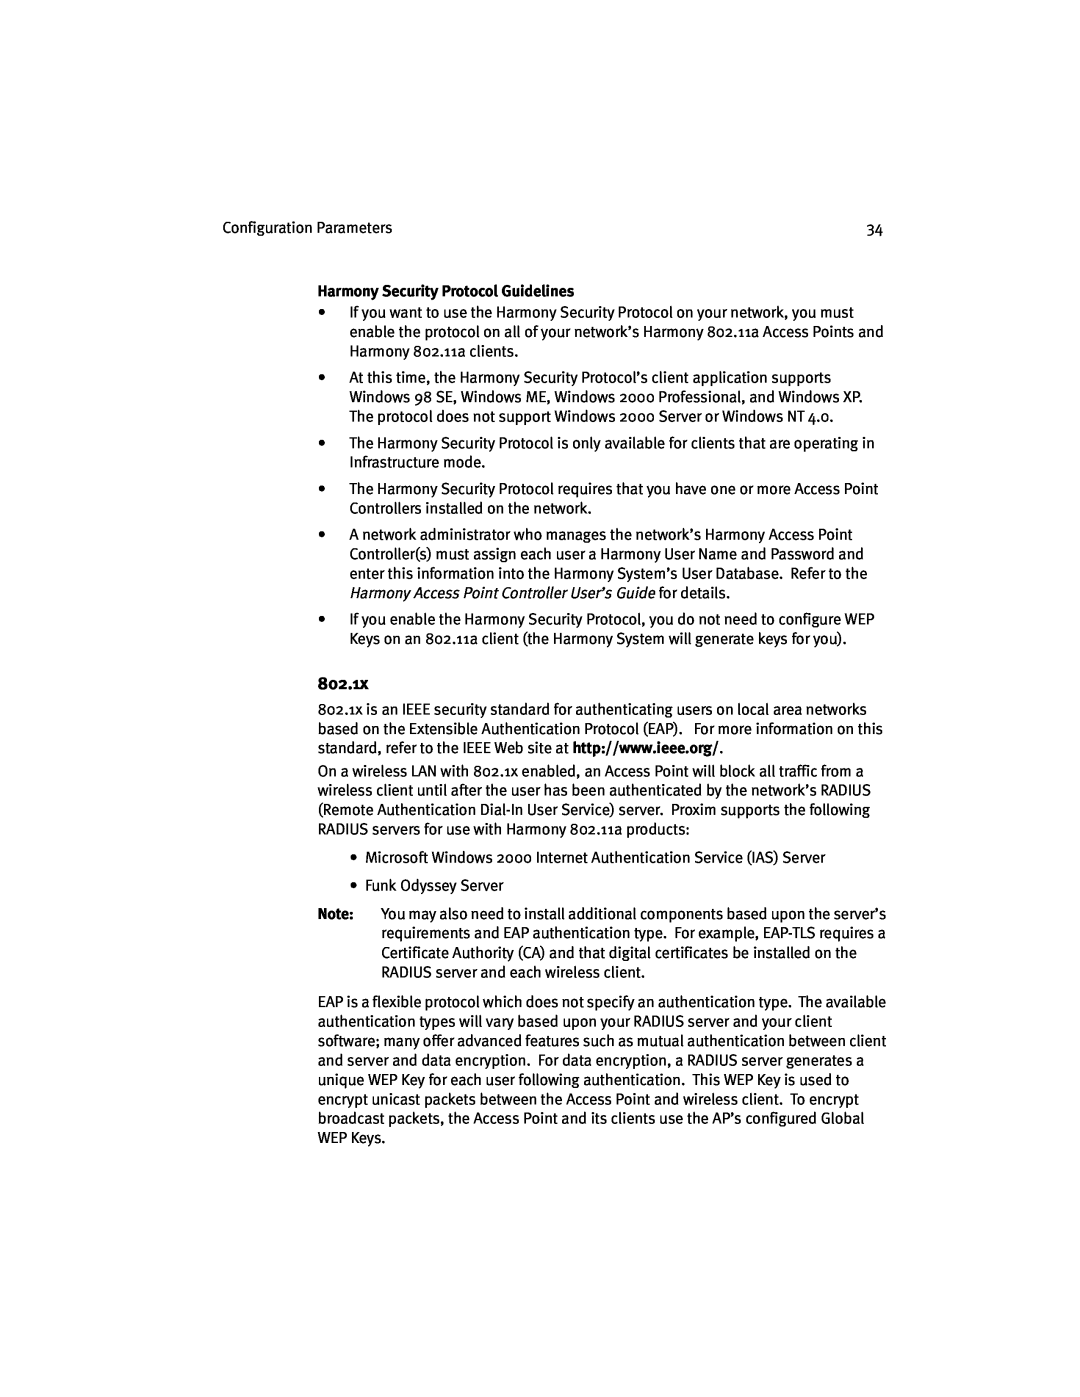 Harmony House 802.11a manual 802.1x, Harmony Security Protocol Guidelines 